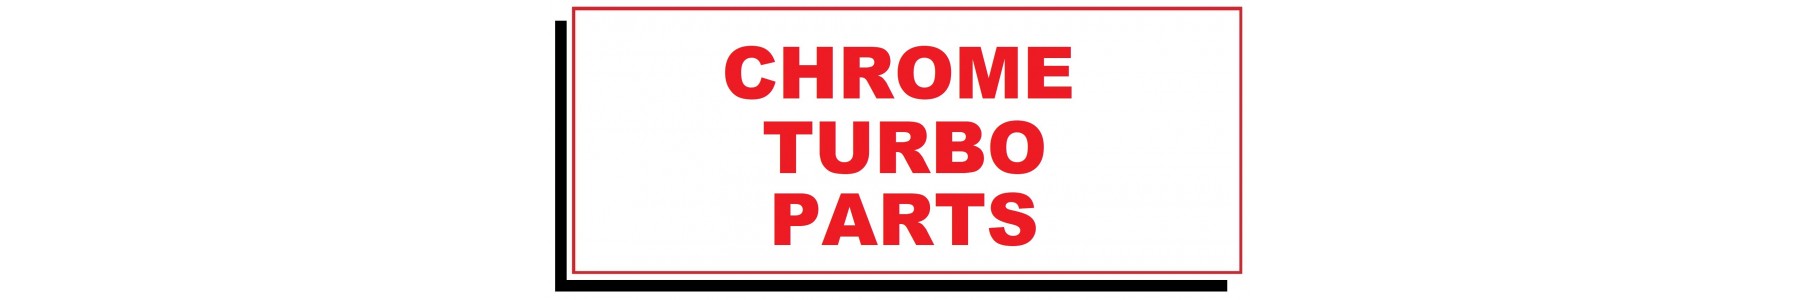 CHROME TURBO PARTS